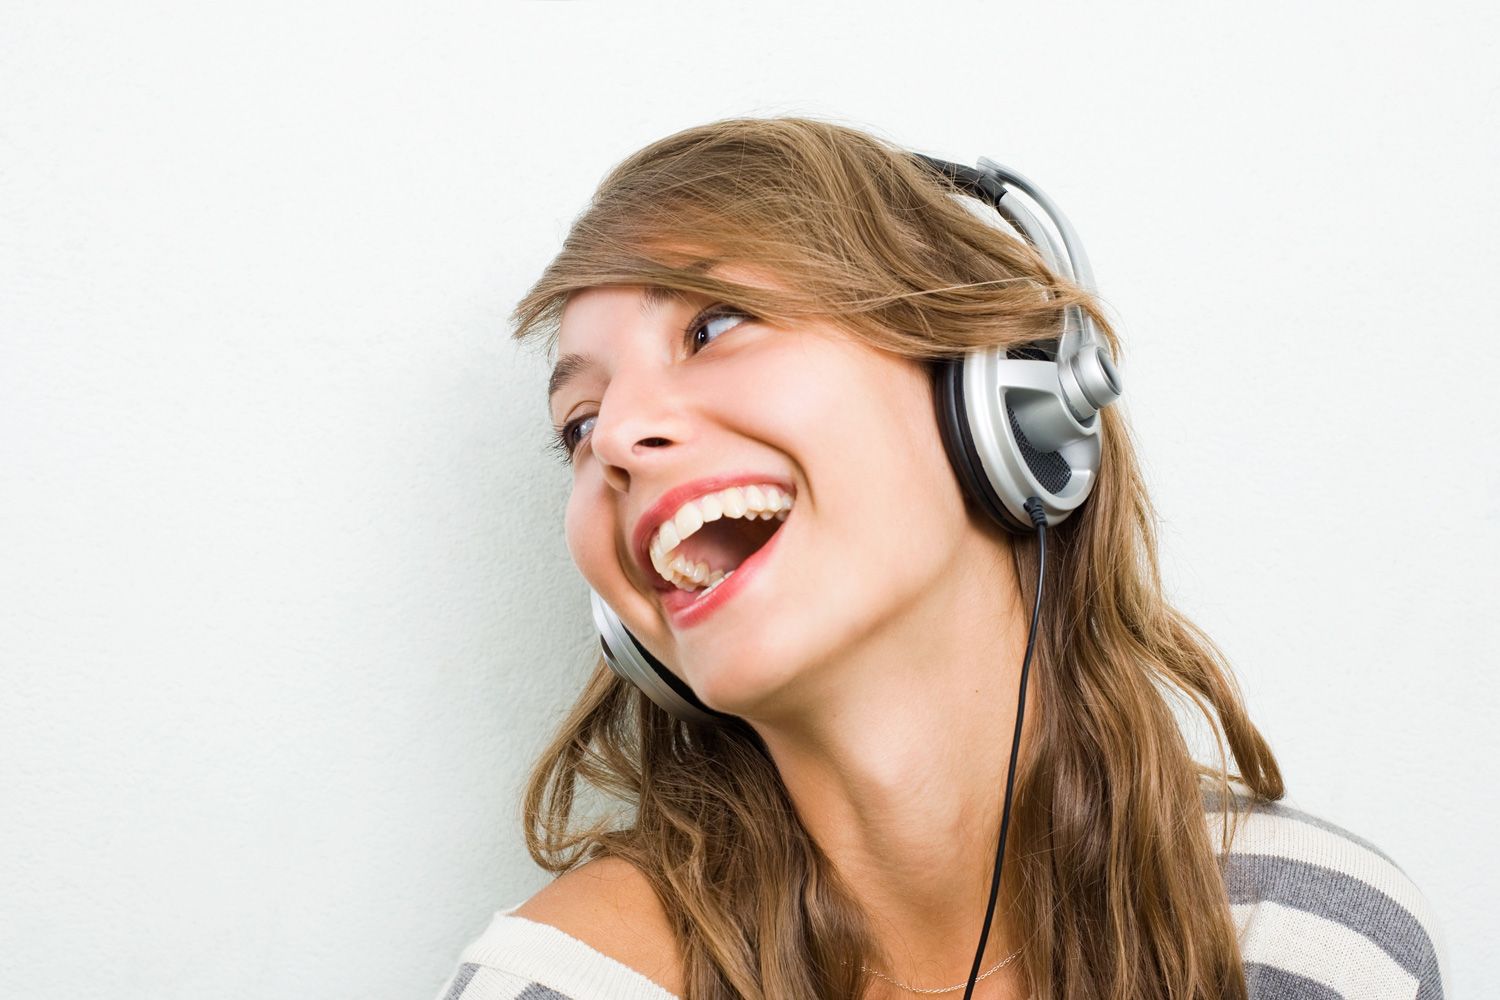 headphones-woman-listening-to-music-pandora-spotify-apple-music-cur-groove-play-google-6495a4c84a76f81e60b4424aefa385a2.jpg